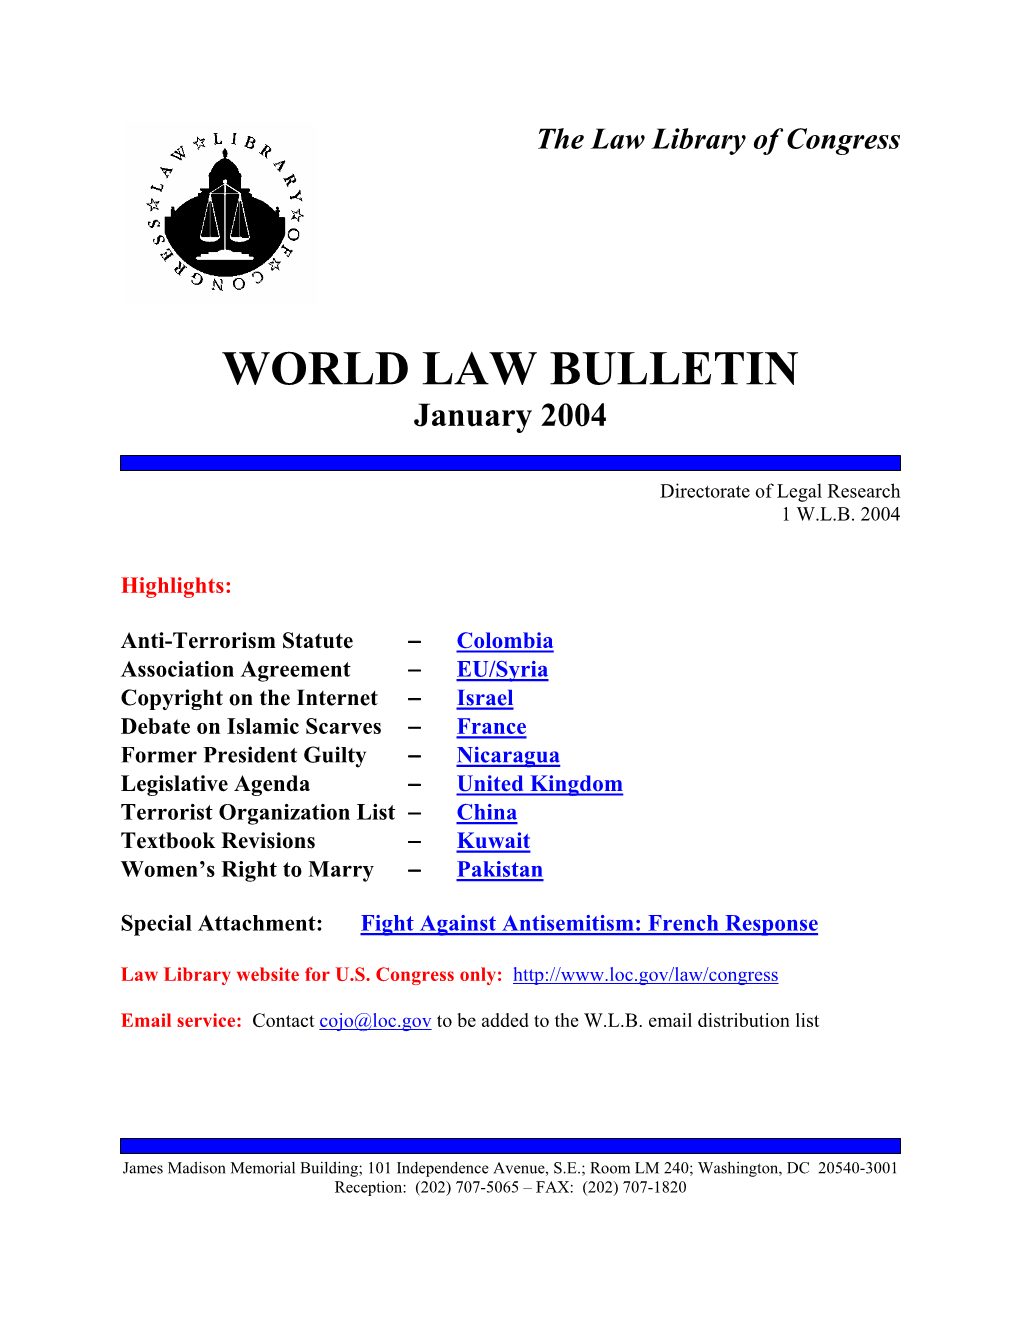 World Law Bulletin, January 2004